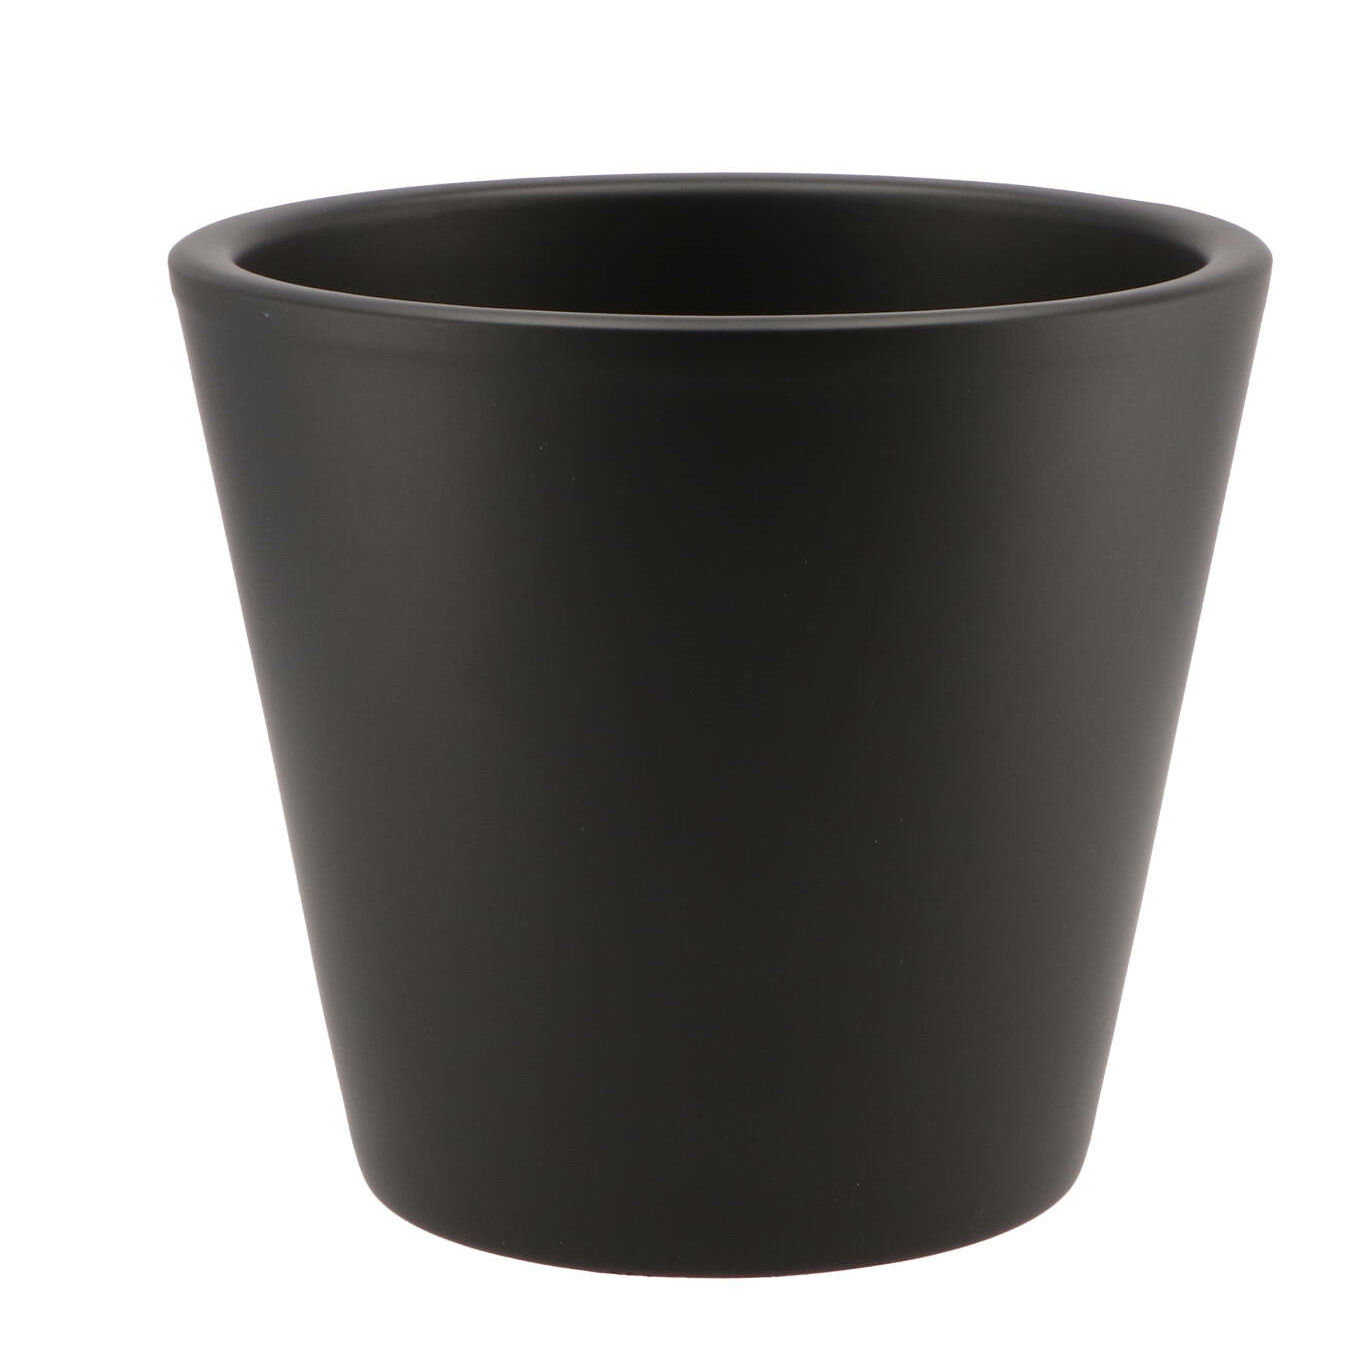 DK Design  bloempot/plantenpot - Vinci - zwart mat - voor kamerplant - D19 x H21 cm -